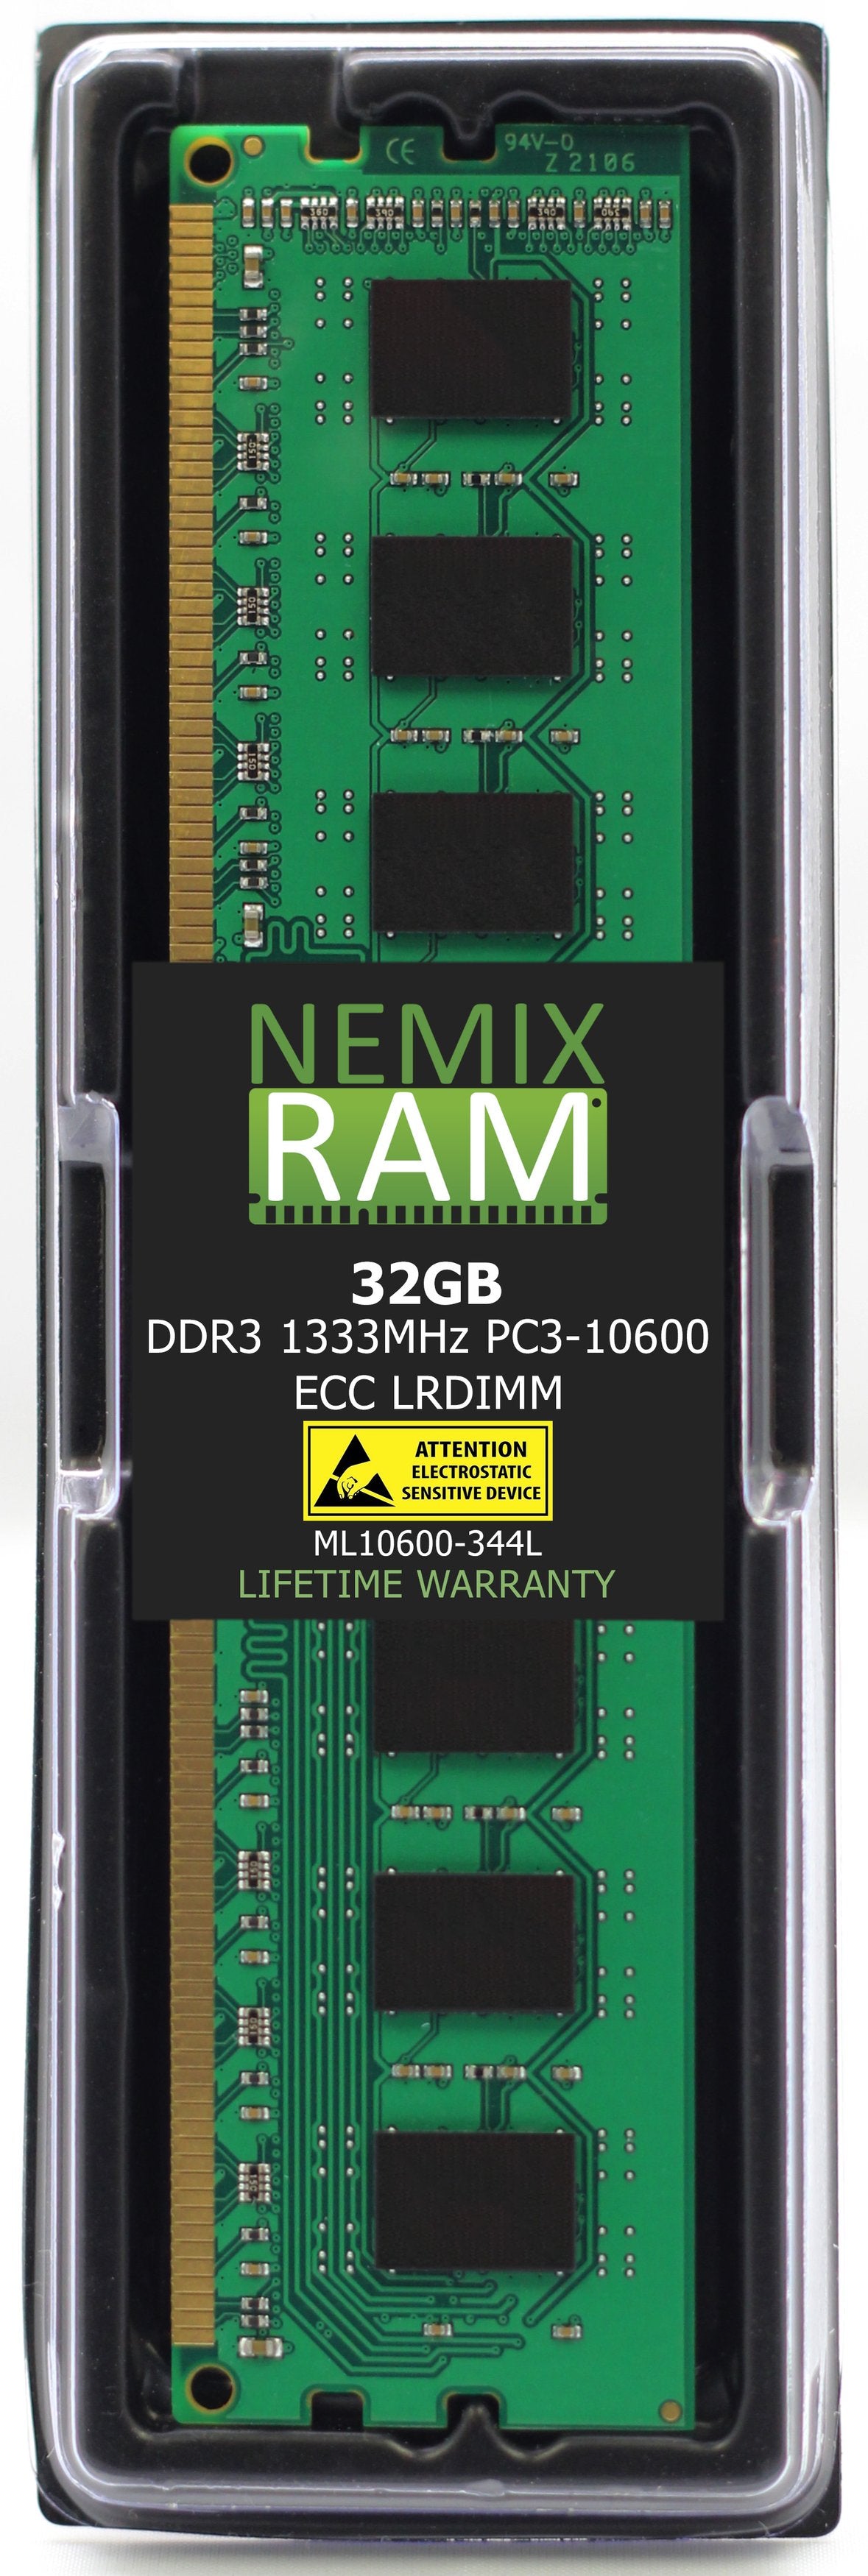 Hynix HMT84GL7AMR4A-H9 32GB DDR3 1333MHZ PC3-10600 LRDIMM Compatible Memory Module